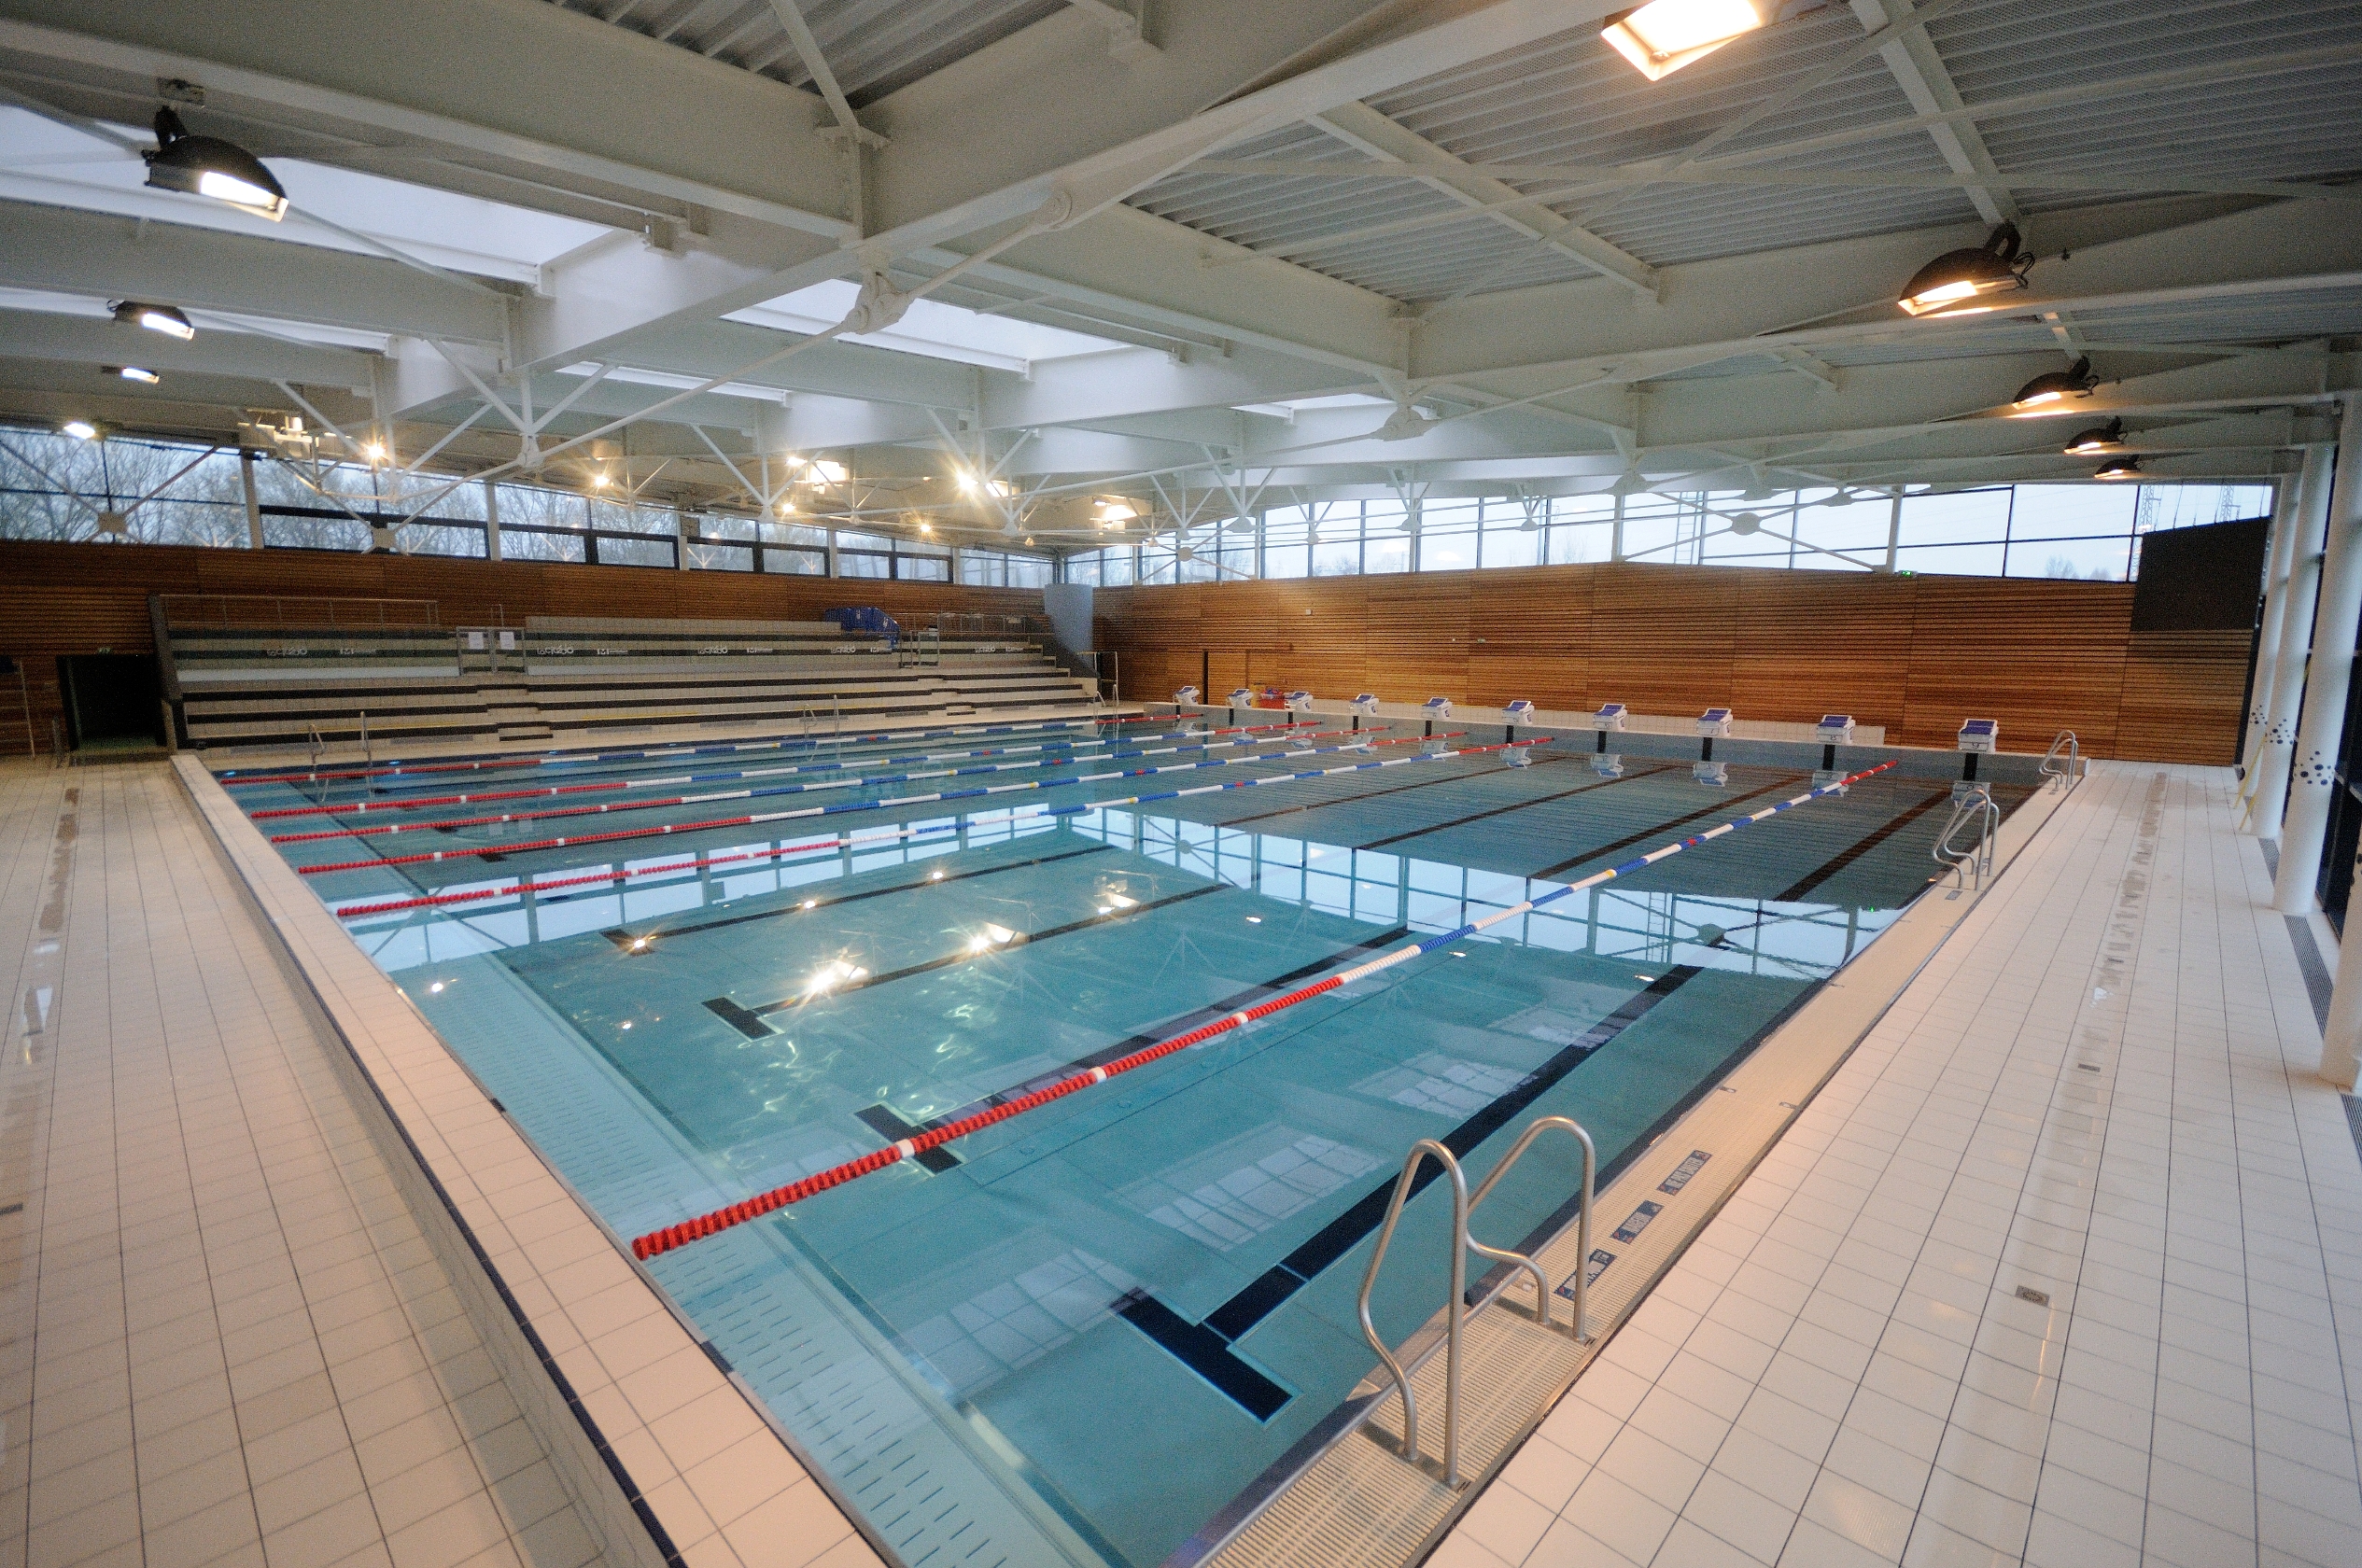 Bassin sportif de la piscine La Citédo de Sochaux